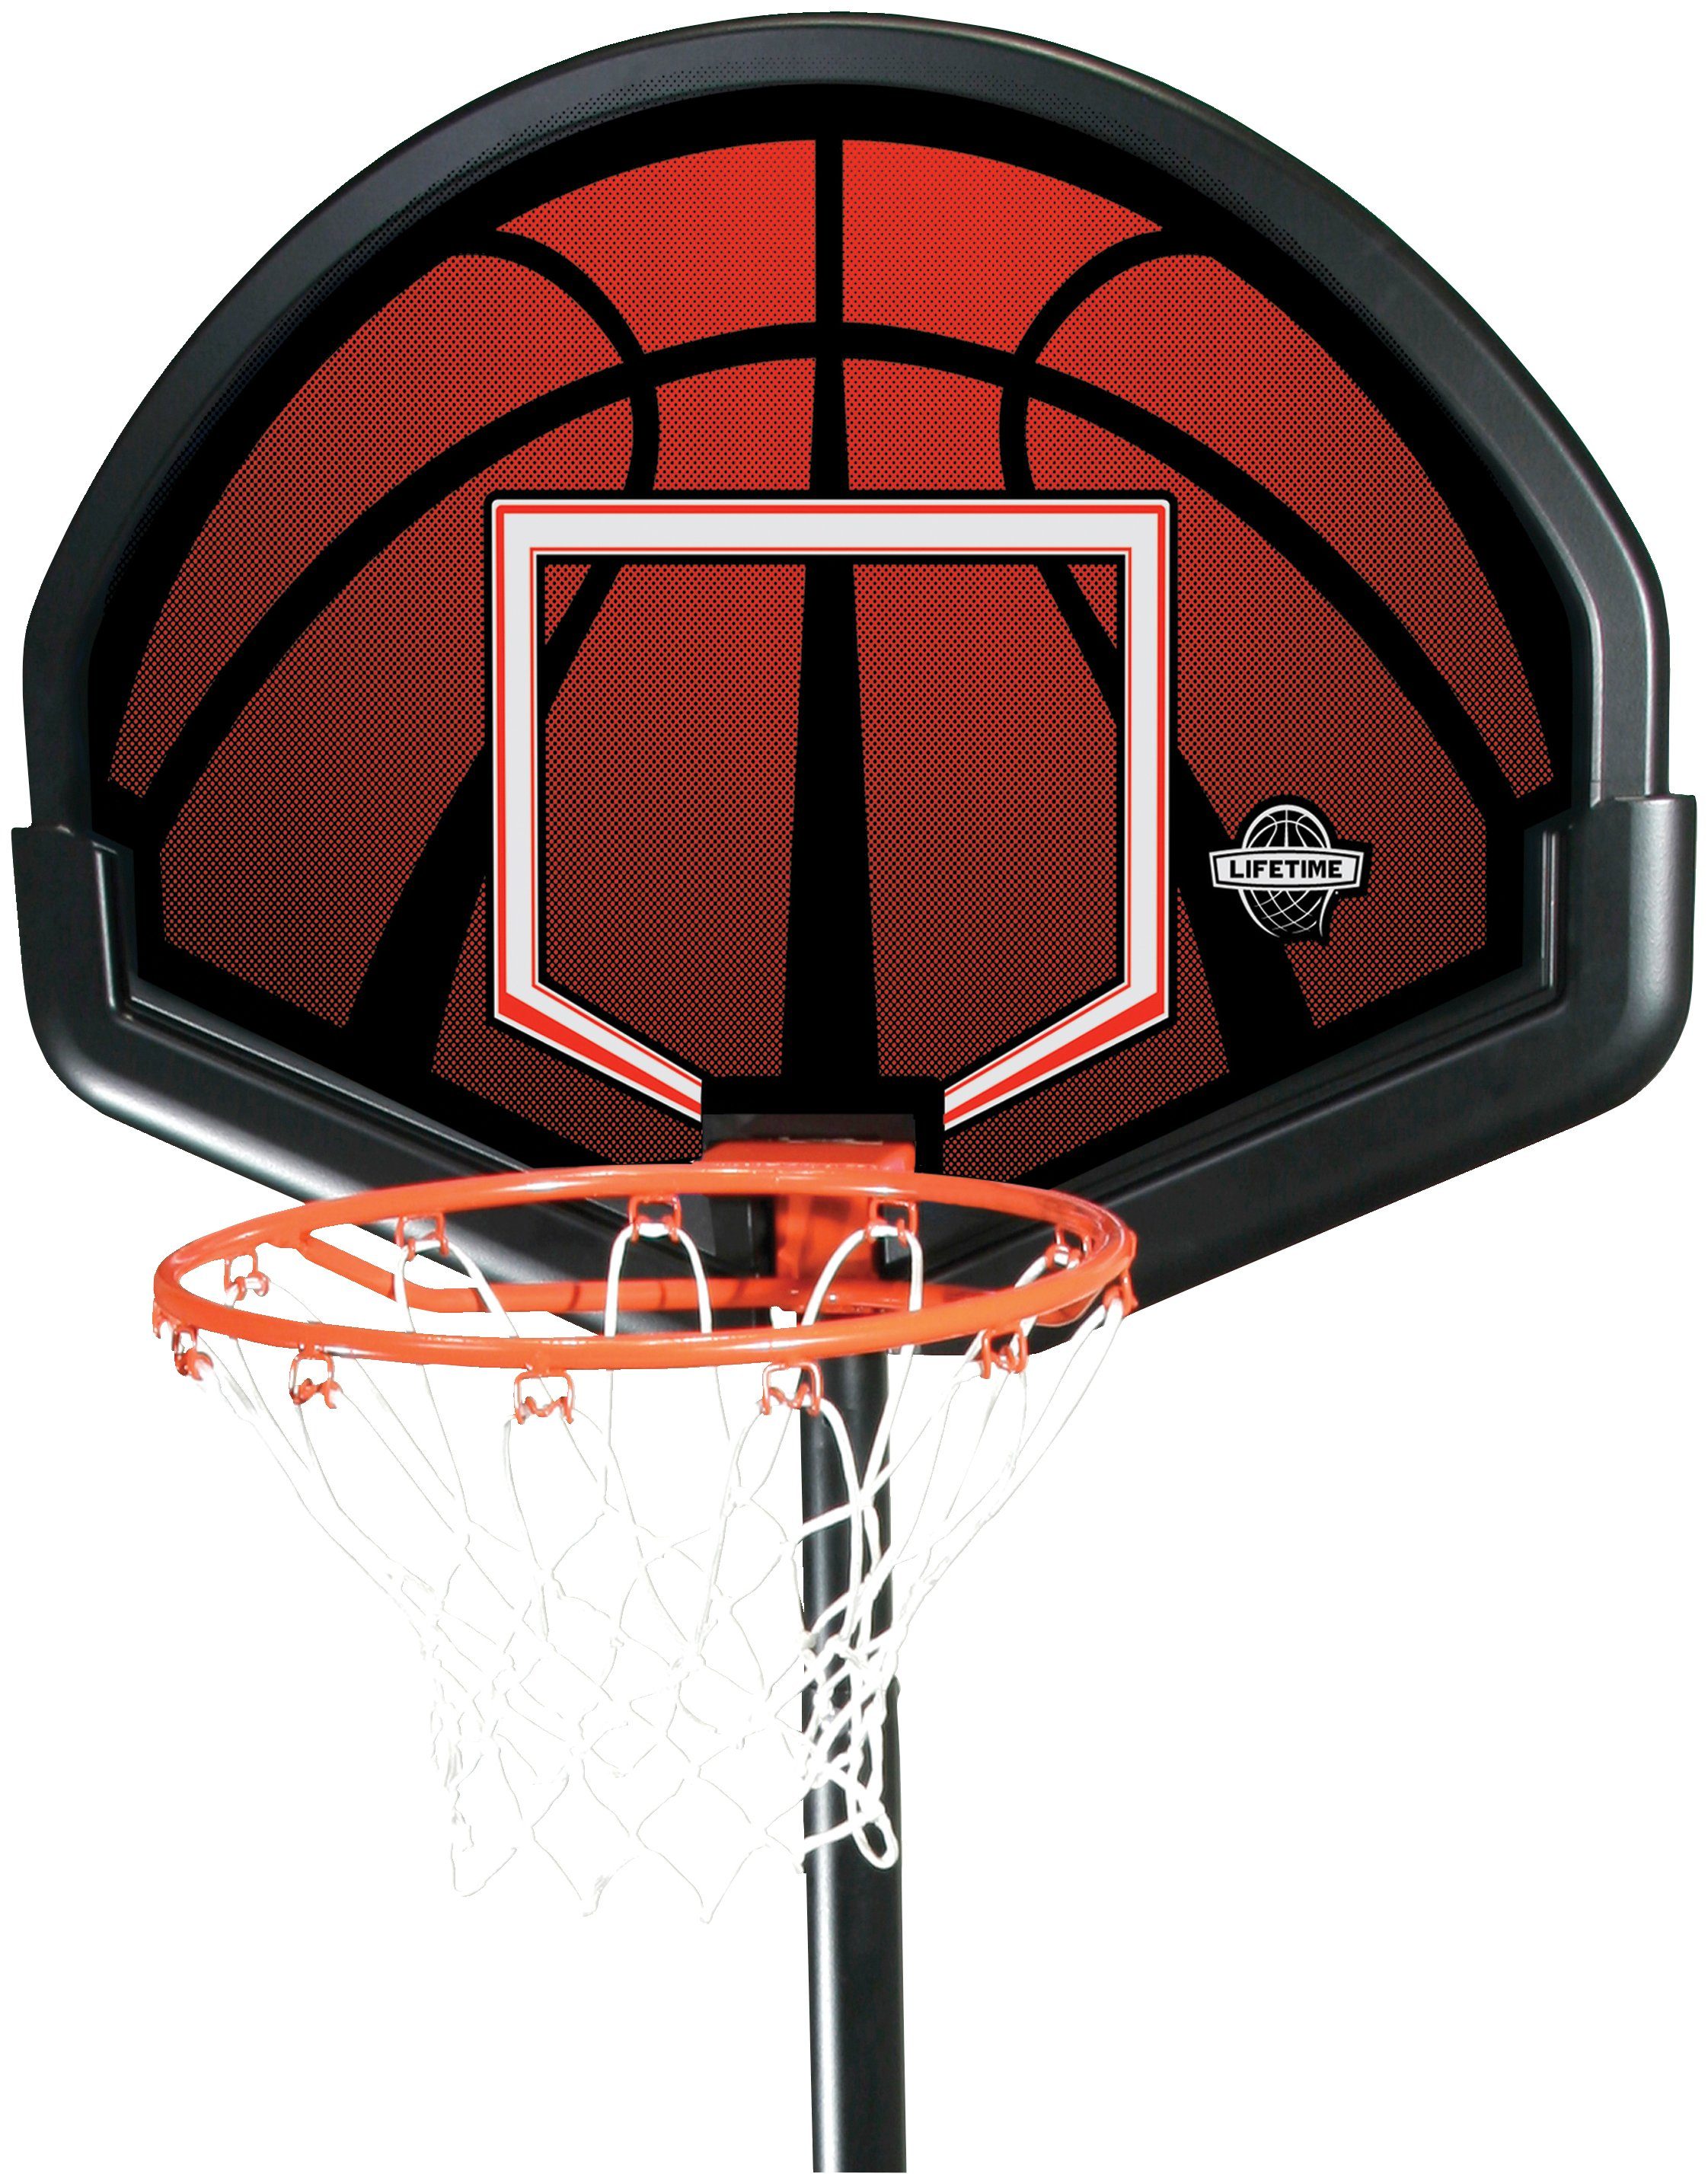 50NRTH höhenverstellbar Basketballkorb schwarz/rot Alabama,